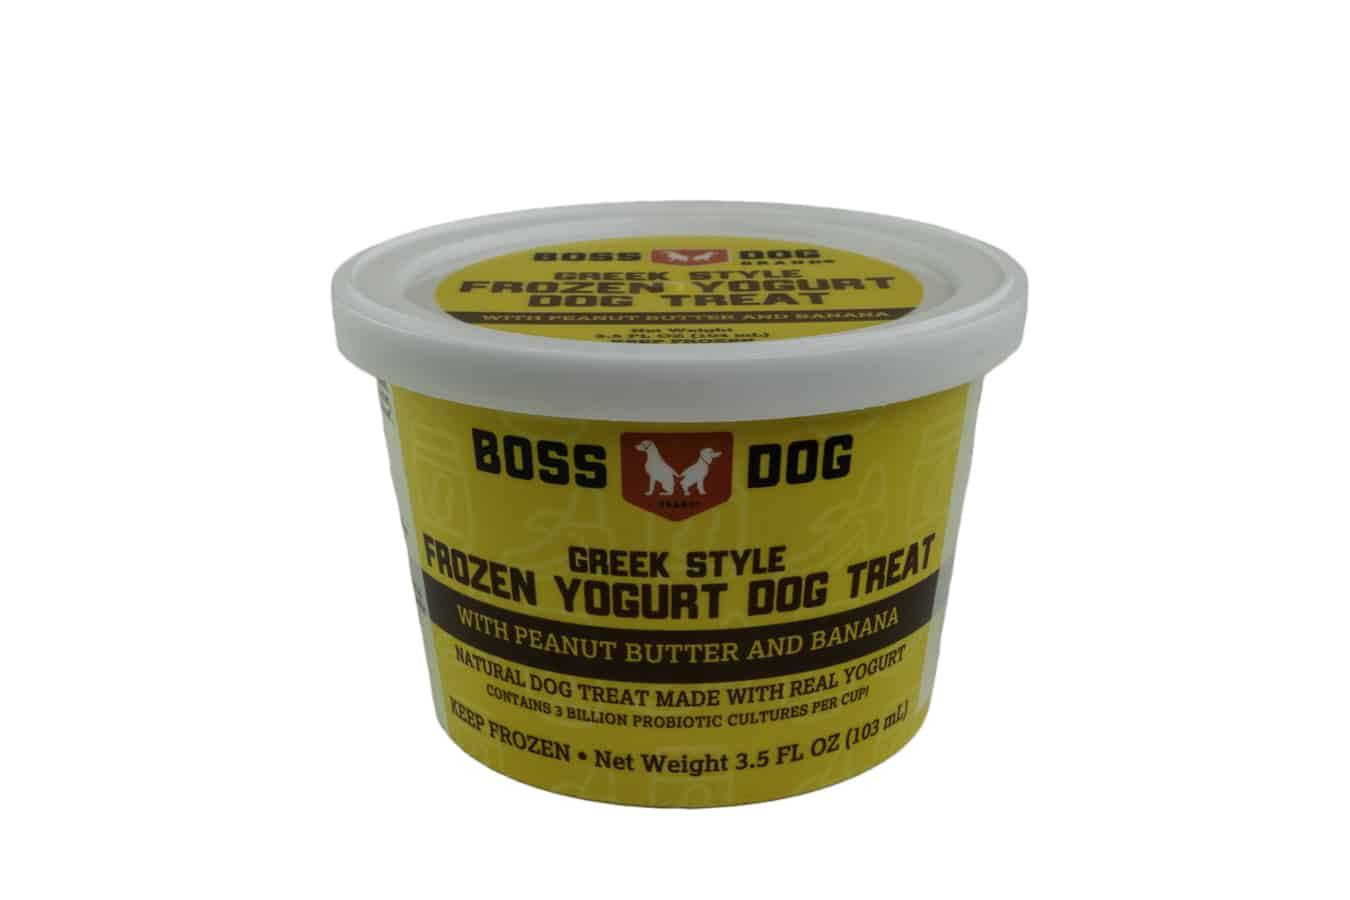 Boss Dog Greek Style Frozen Yogurt Peanut Butter & Banana Dog Treat